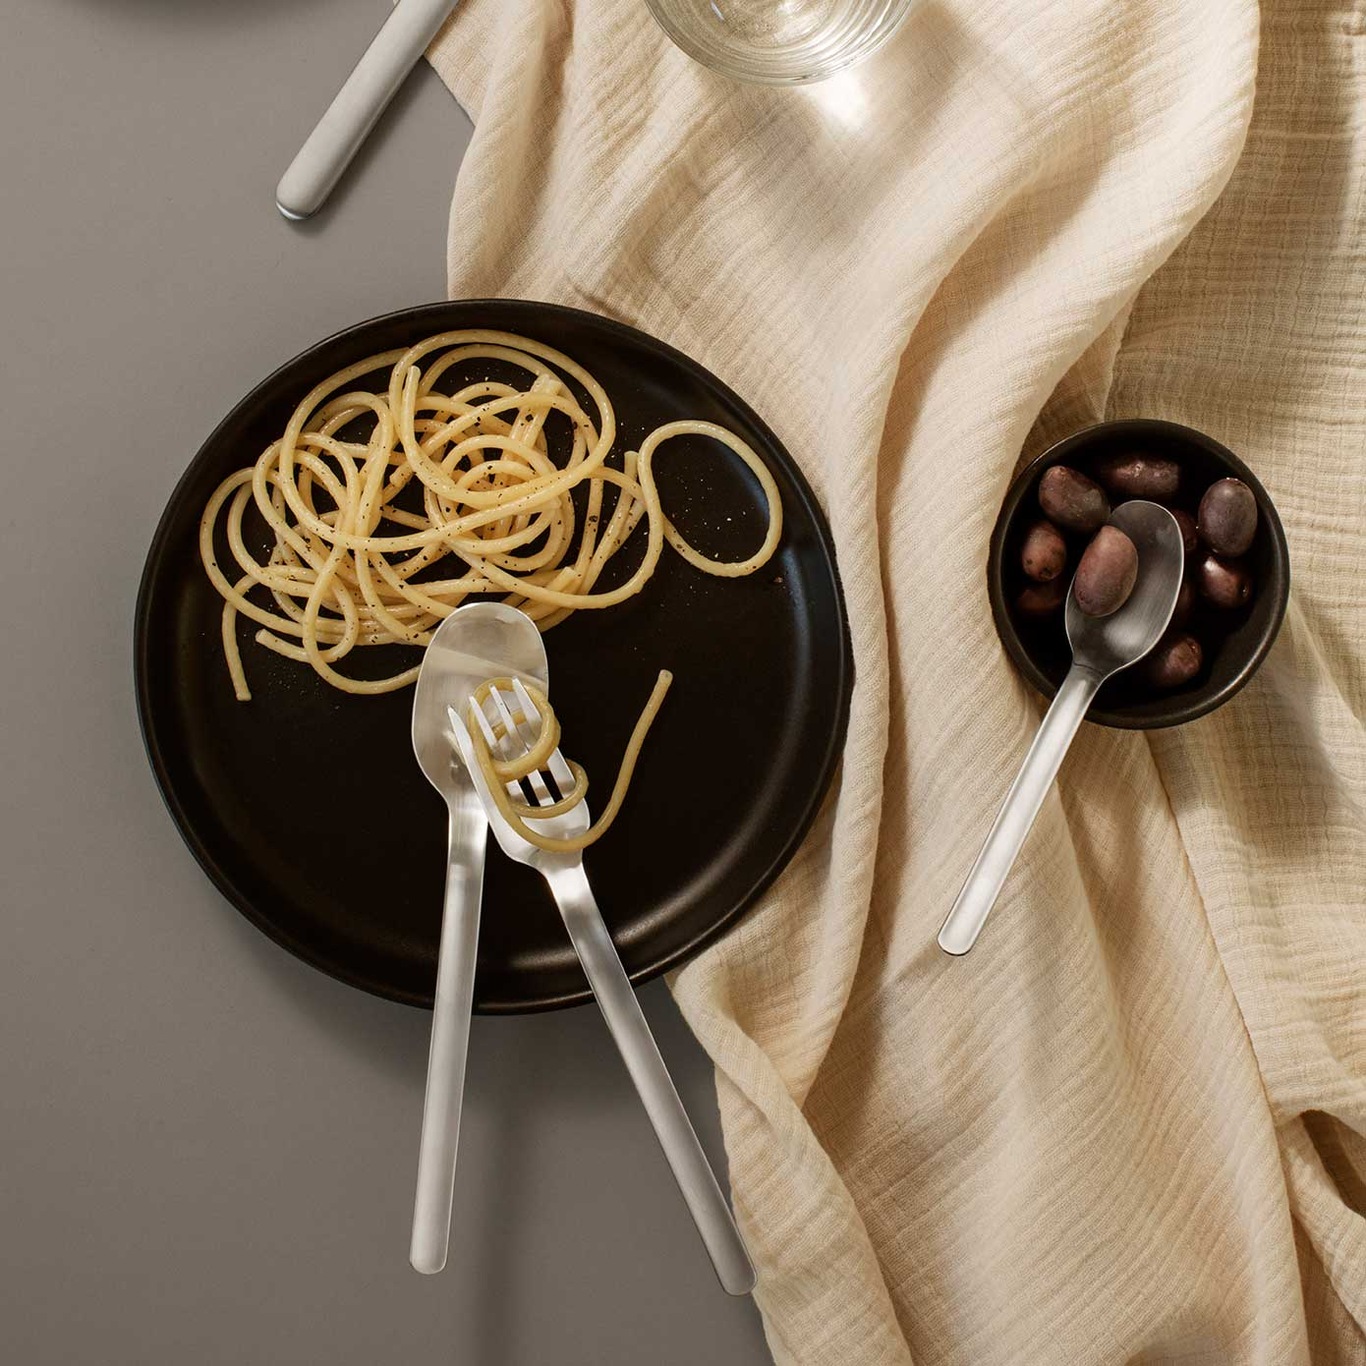 https://royaldesign.com/image/2/eva-solo-nordic-kitchen-cutlery-set-16-pieces-0?w=800&quality=80